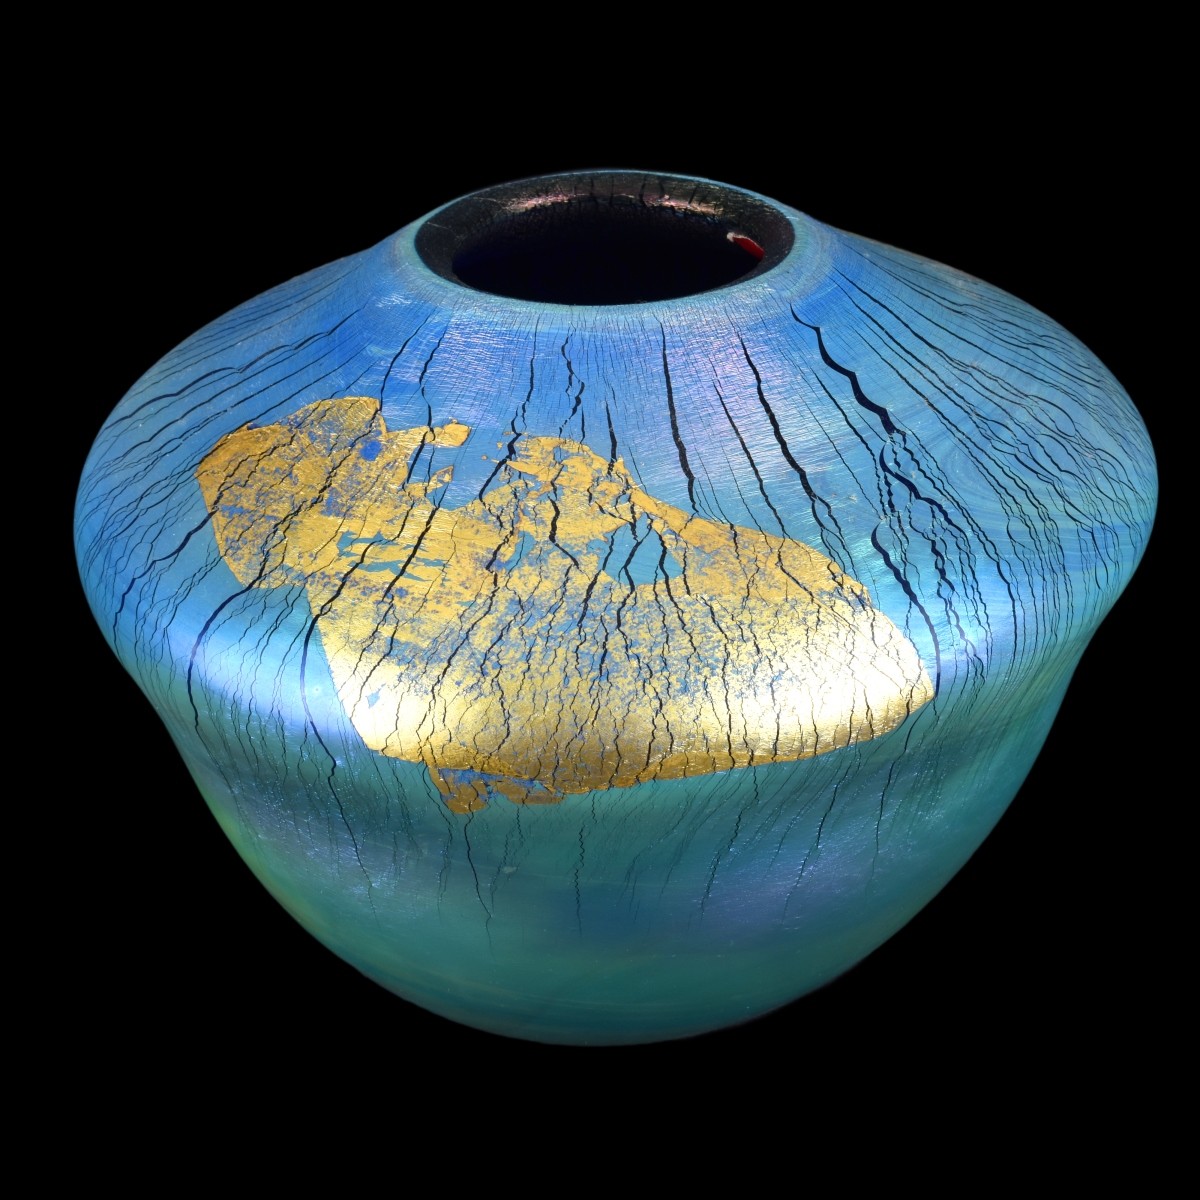 Three (3) Robert Eickholt Art Glass Vases